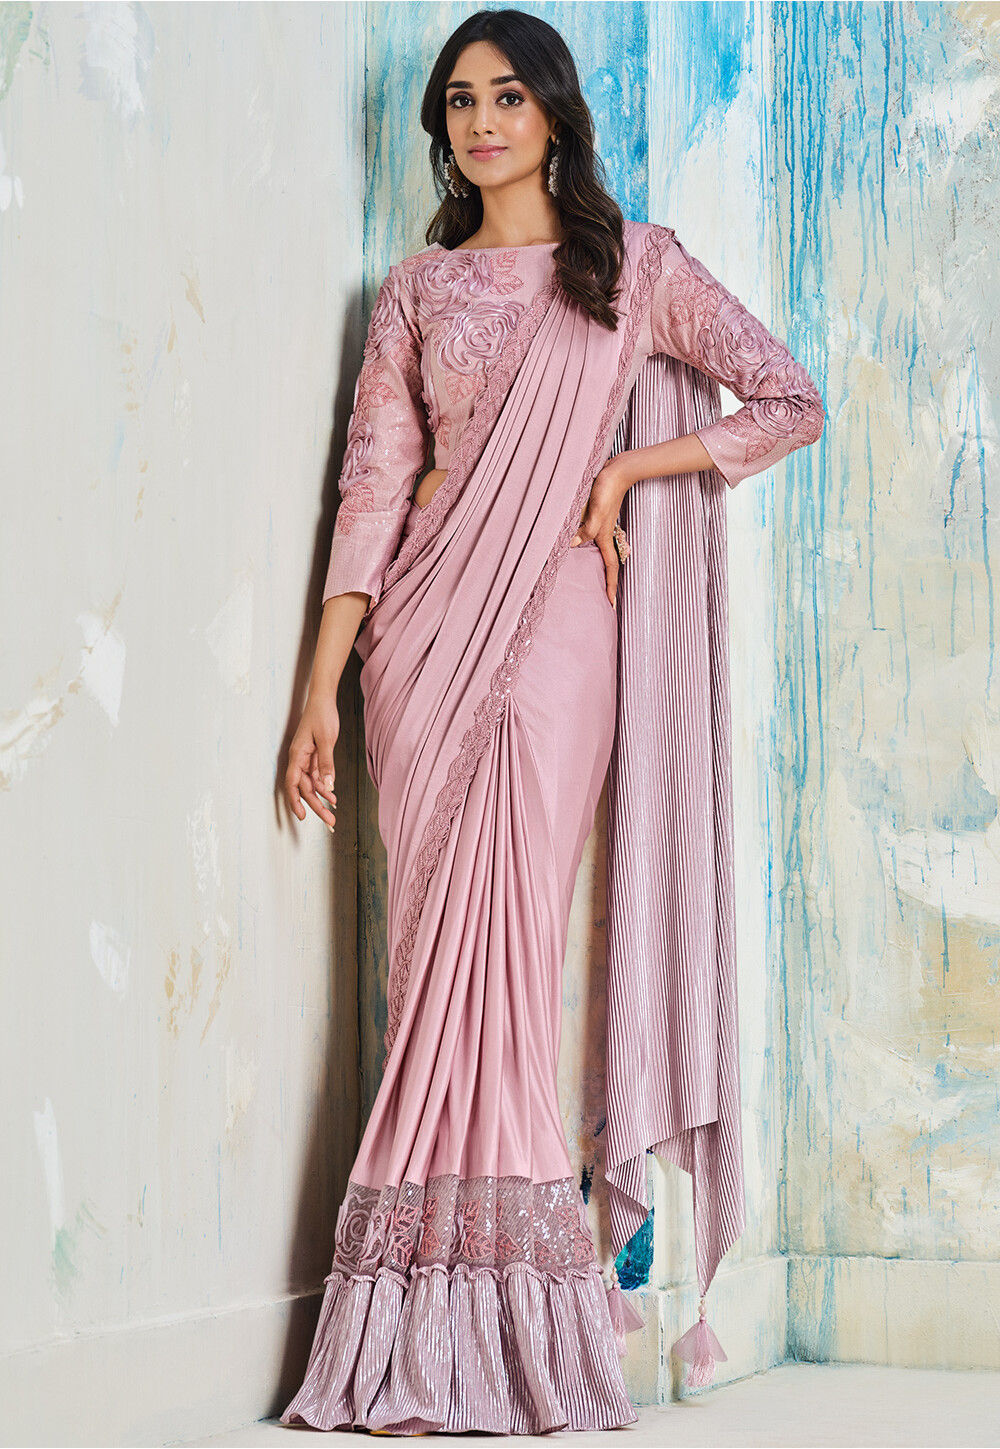 Pink Nena Fashion Women''s Lycra Full Elastic Saree Shapewear